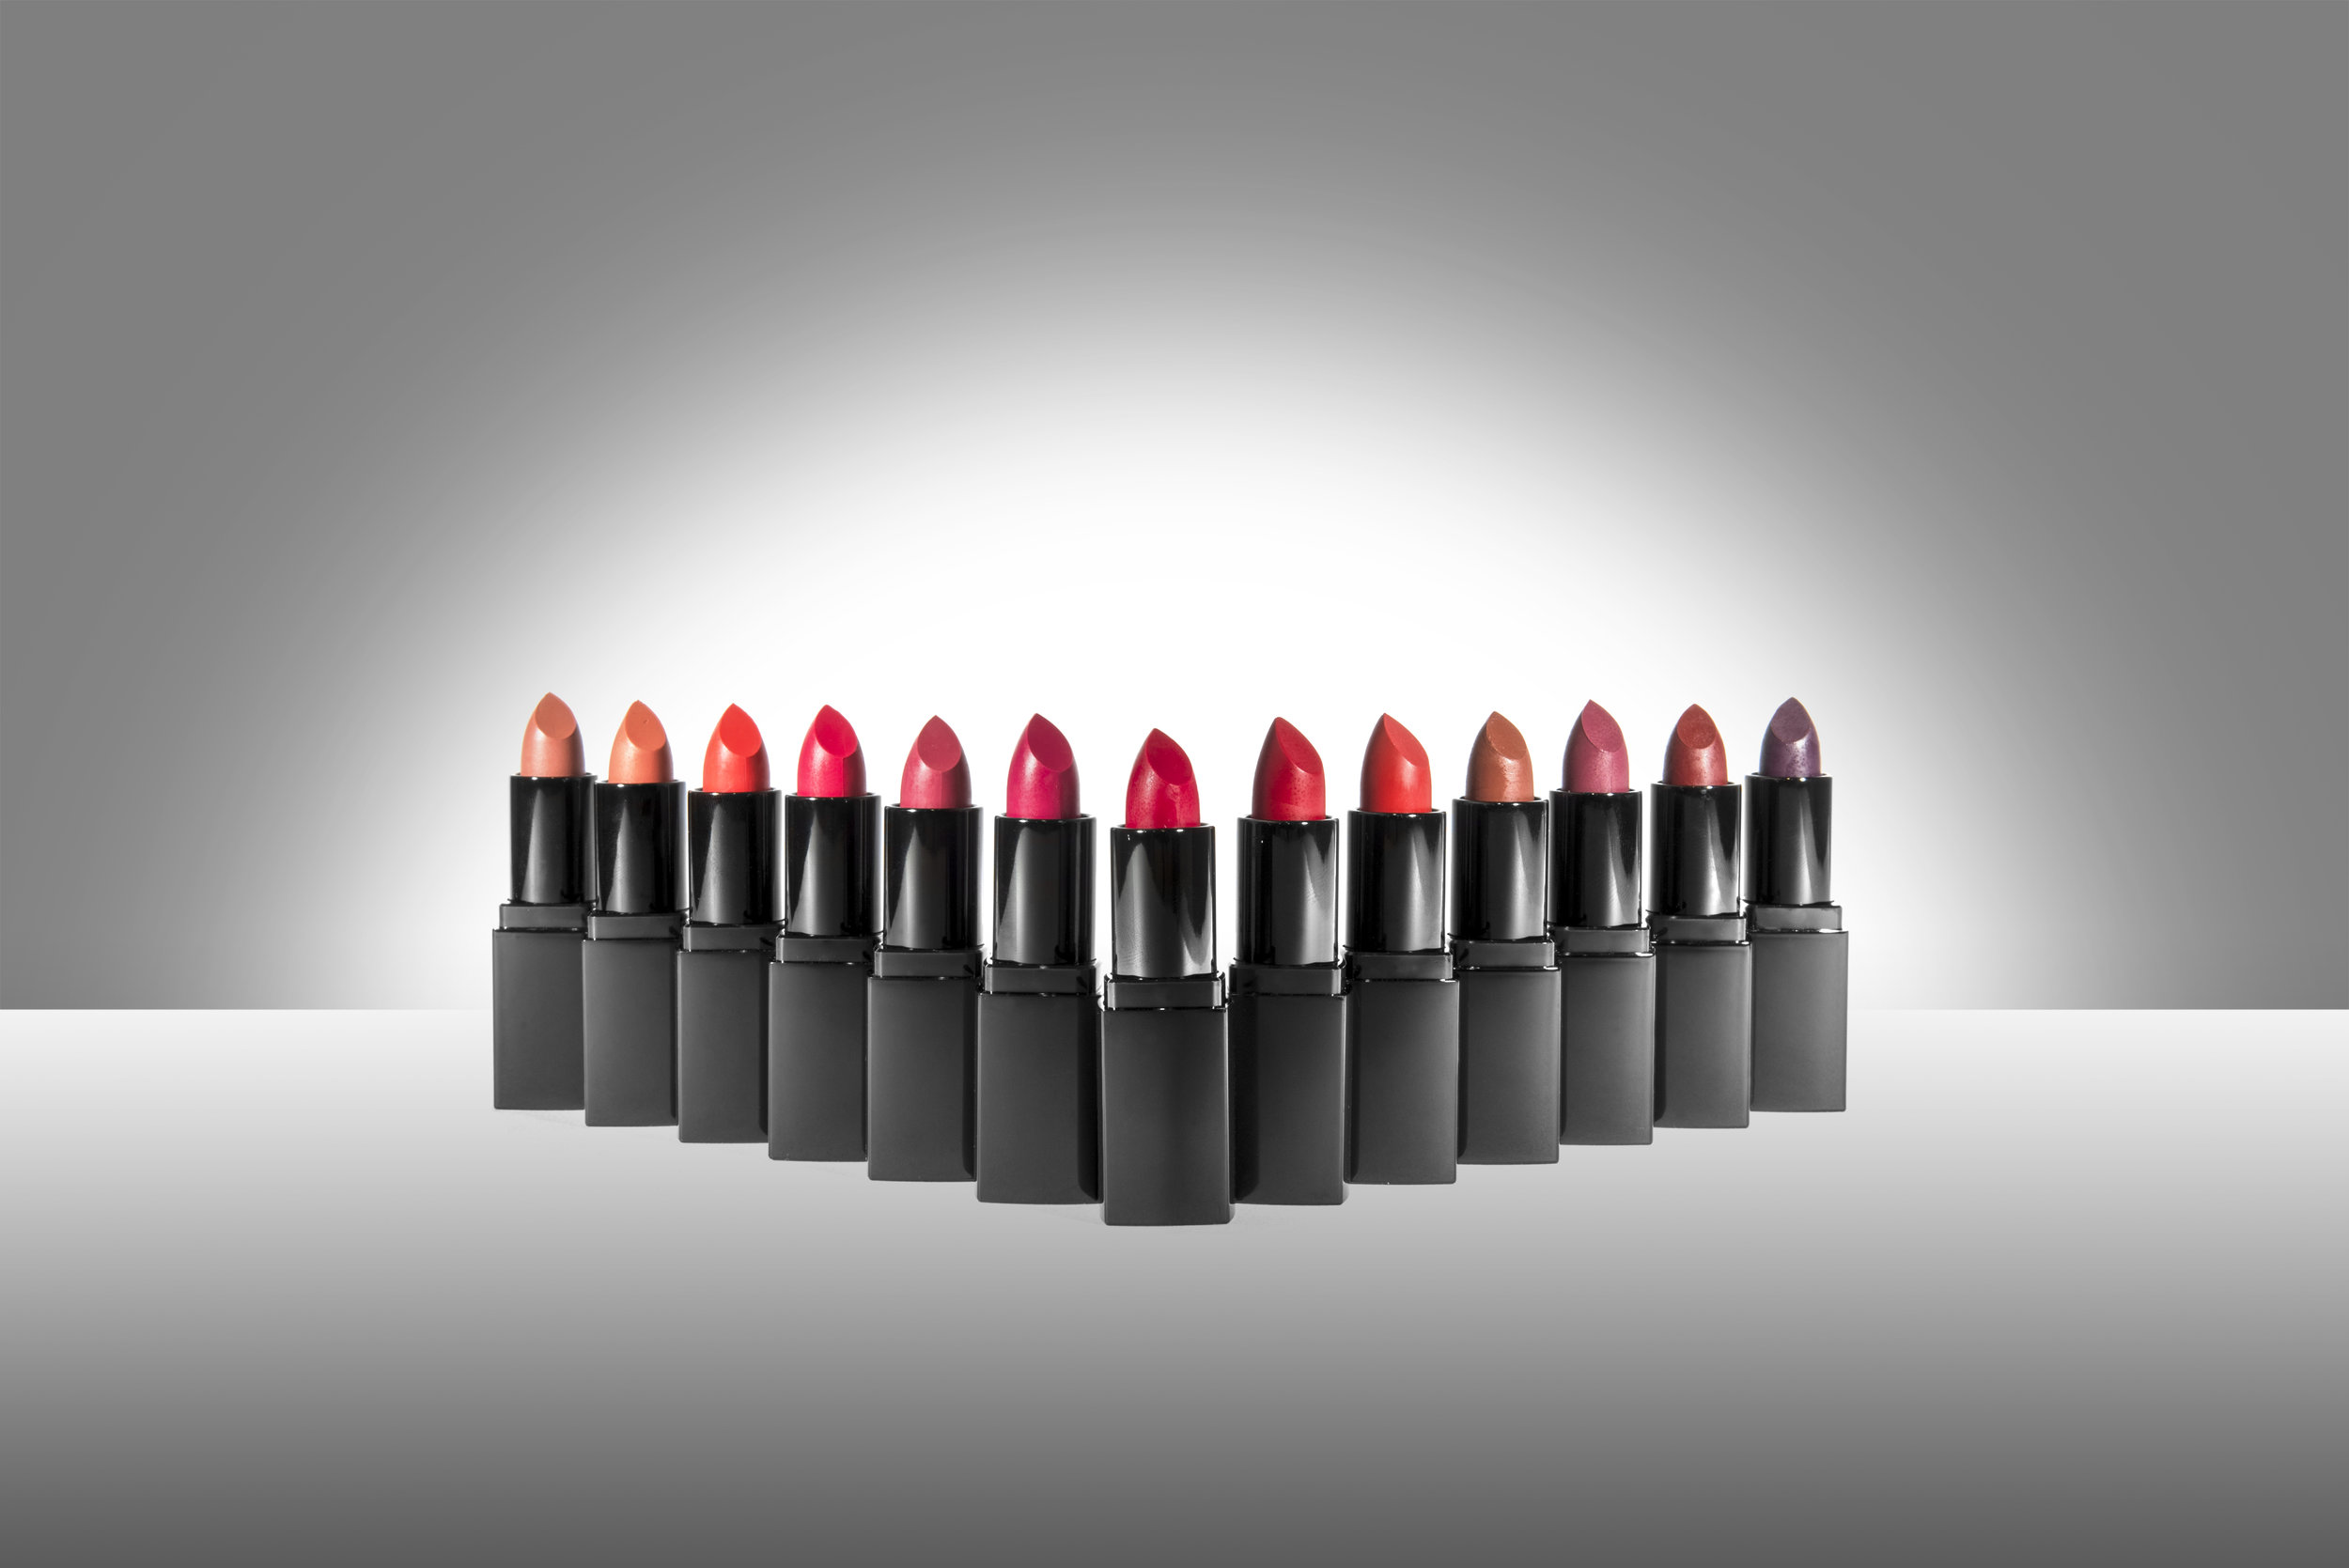 NuEvolution Cosmetics Lipsticks in Formation - photo by Andrew Werner.jpg